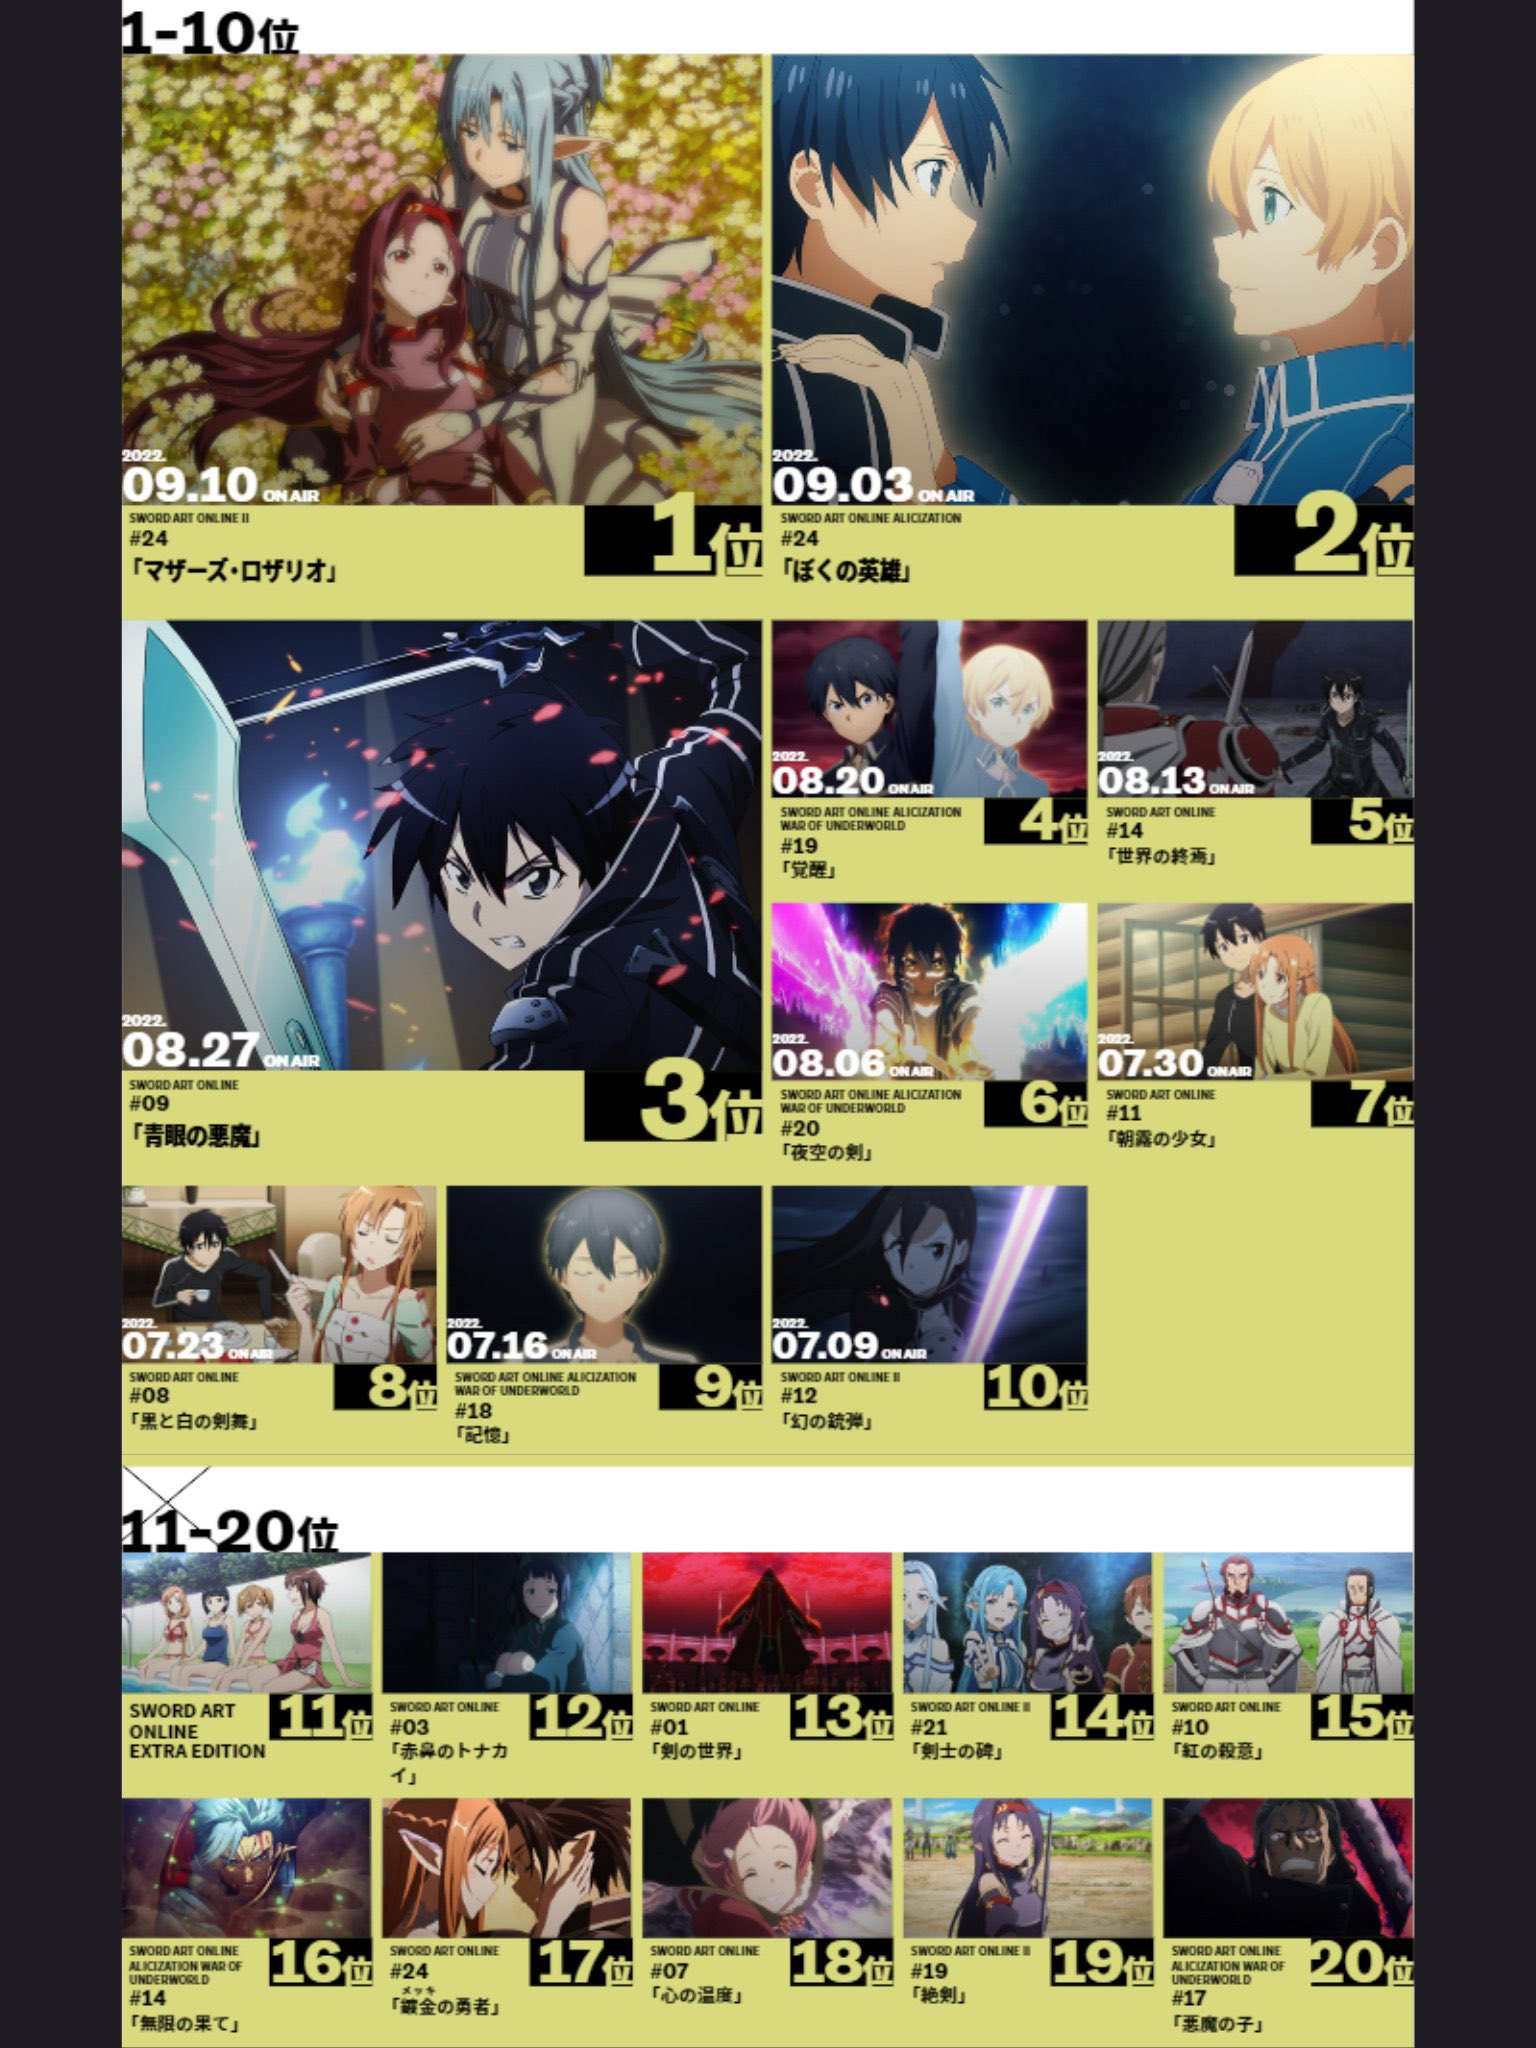 Mother's Rosario Voted Most Popular Sword Art Online Episode in Japan -  Anime Corner